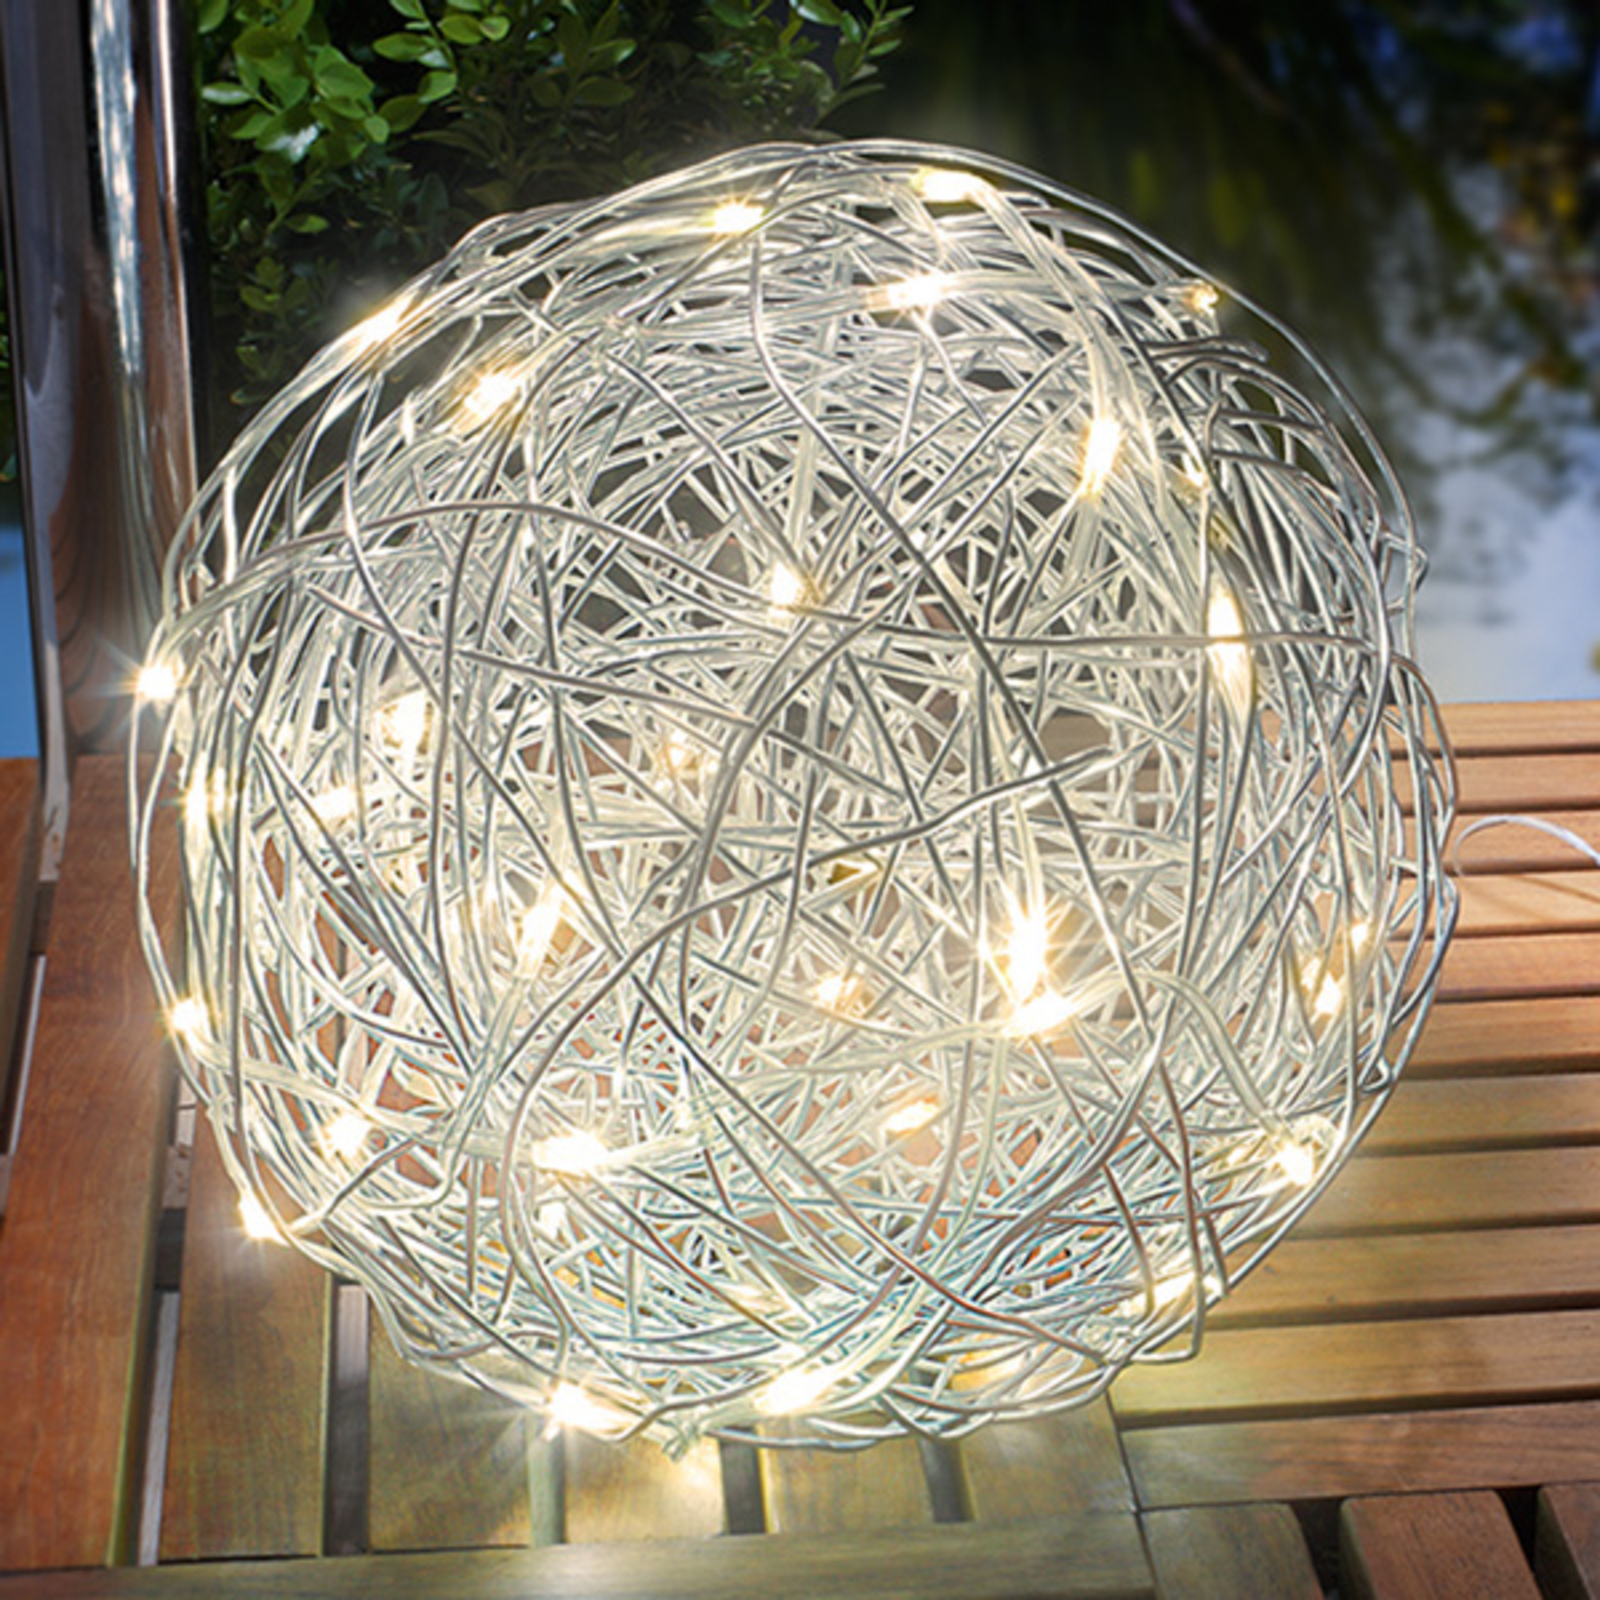 Teplé biele svietiace LED svetlo Alu-Wireball